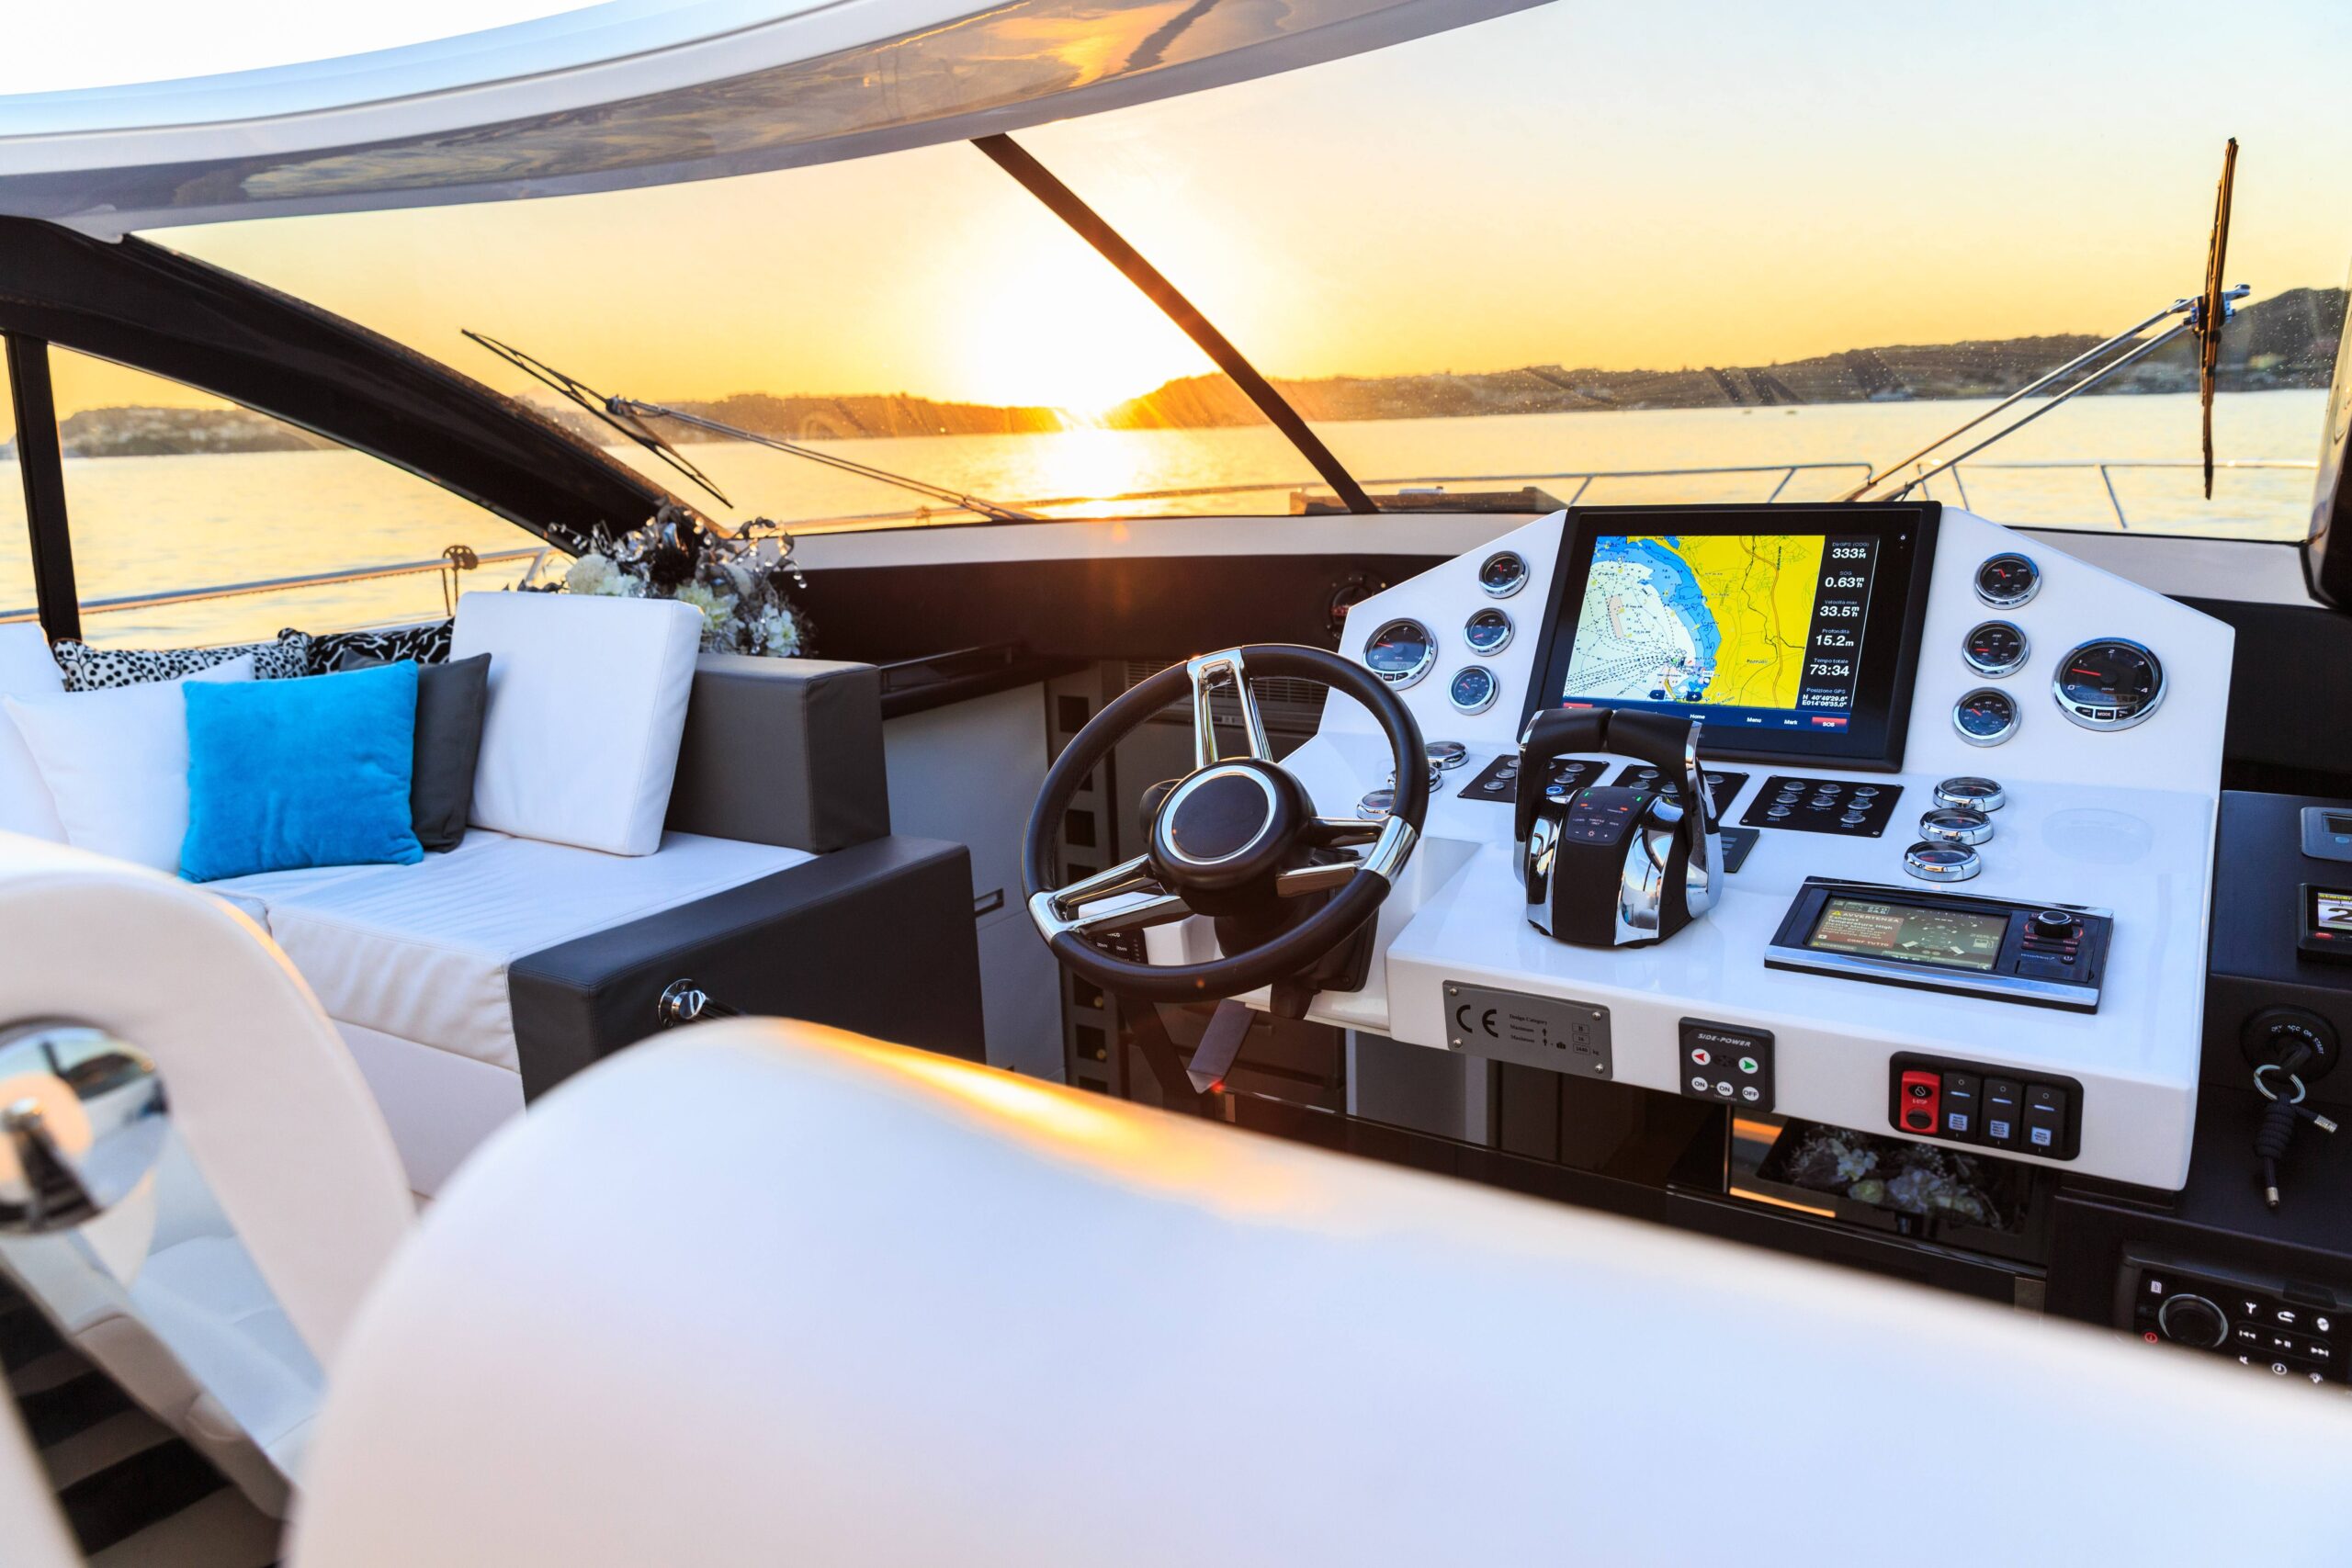 interior of luxury motoryacht at sunset